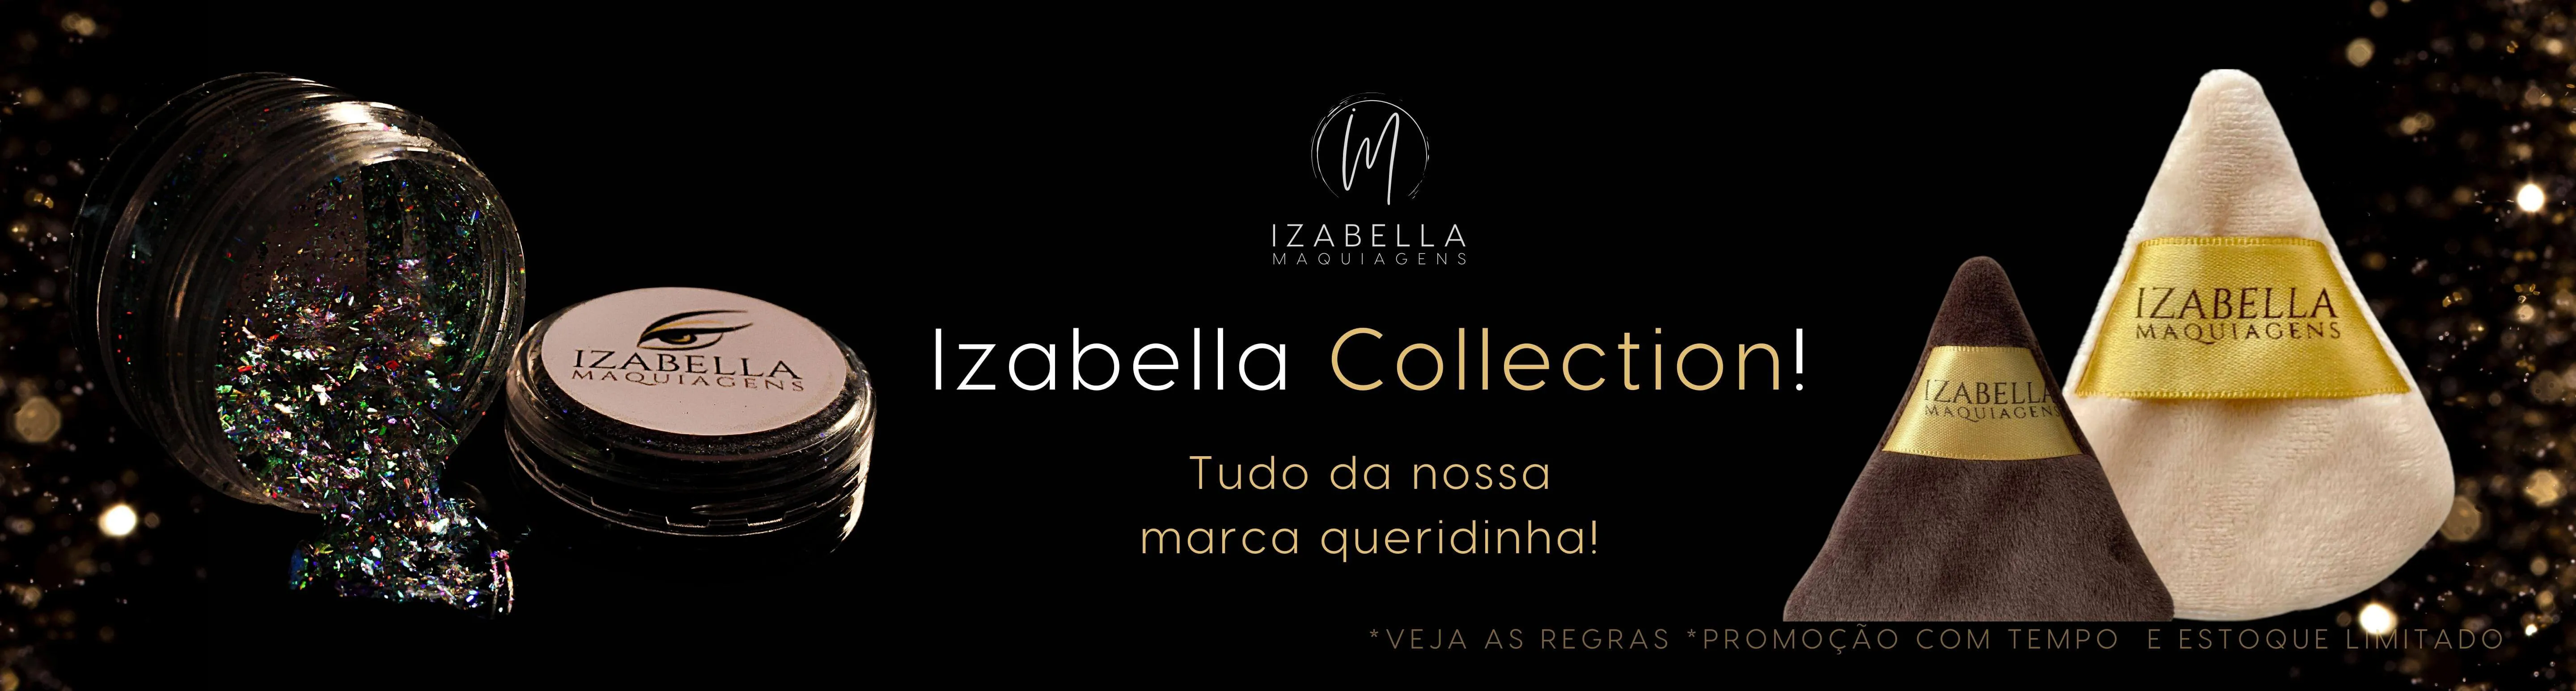 8 - Izabella Collection